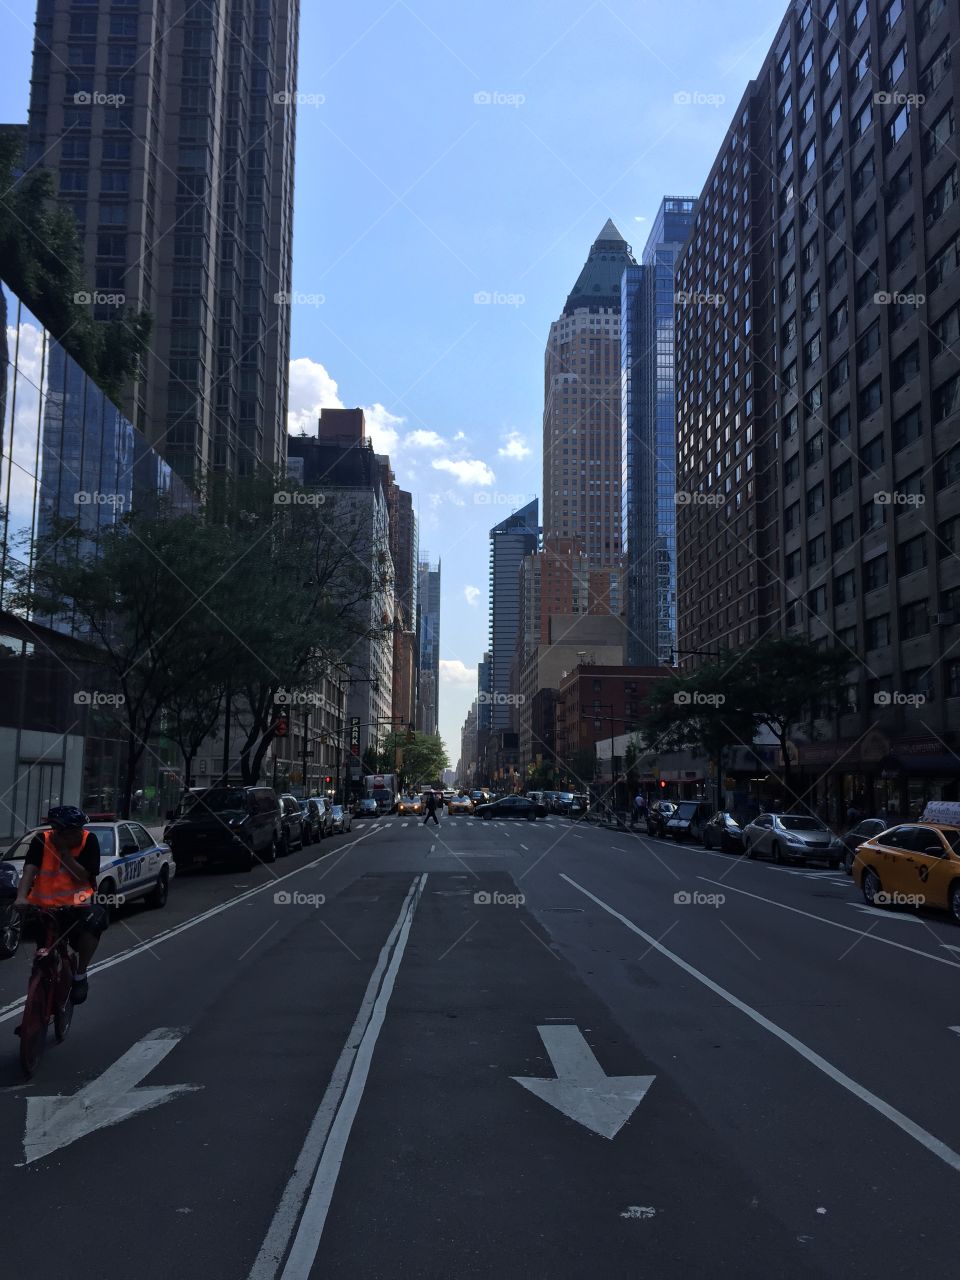 New York Street view
